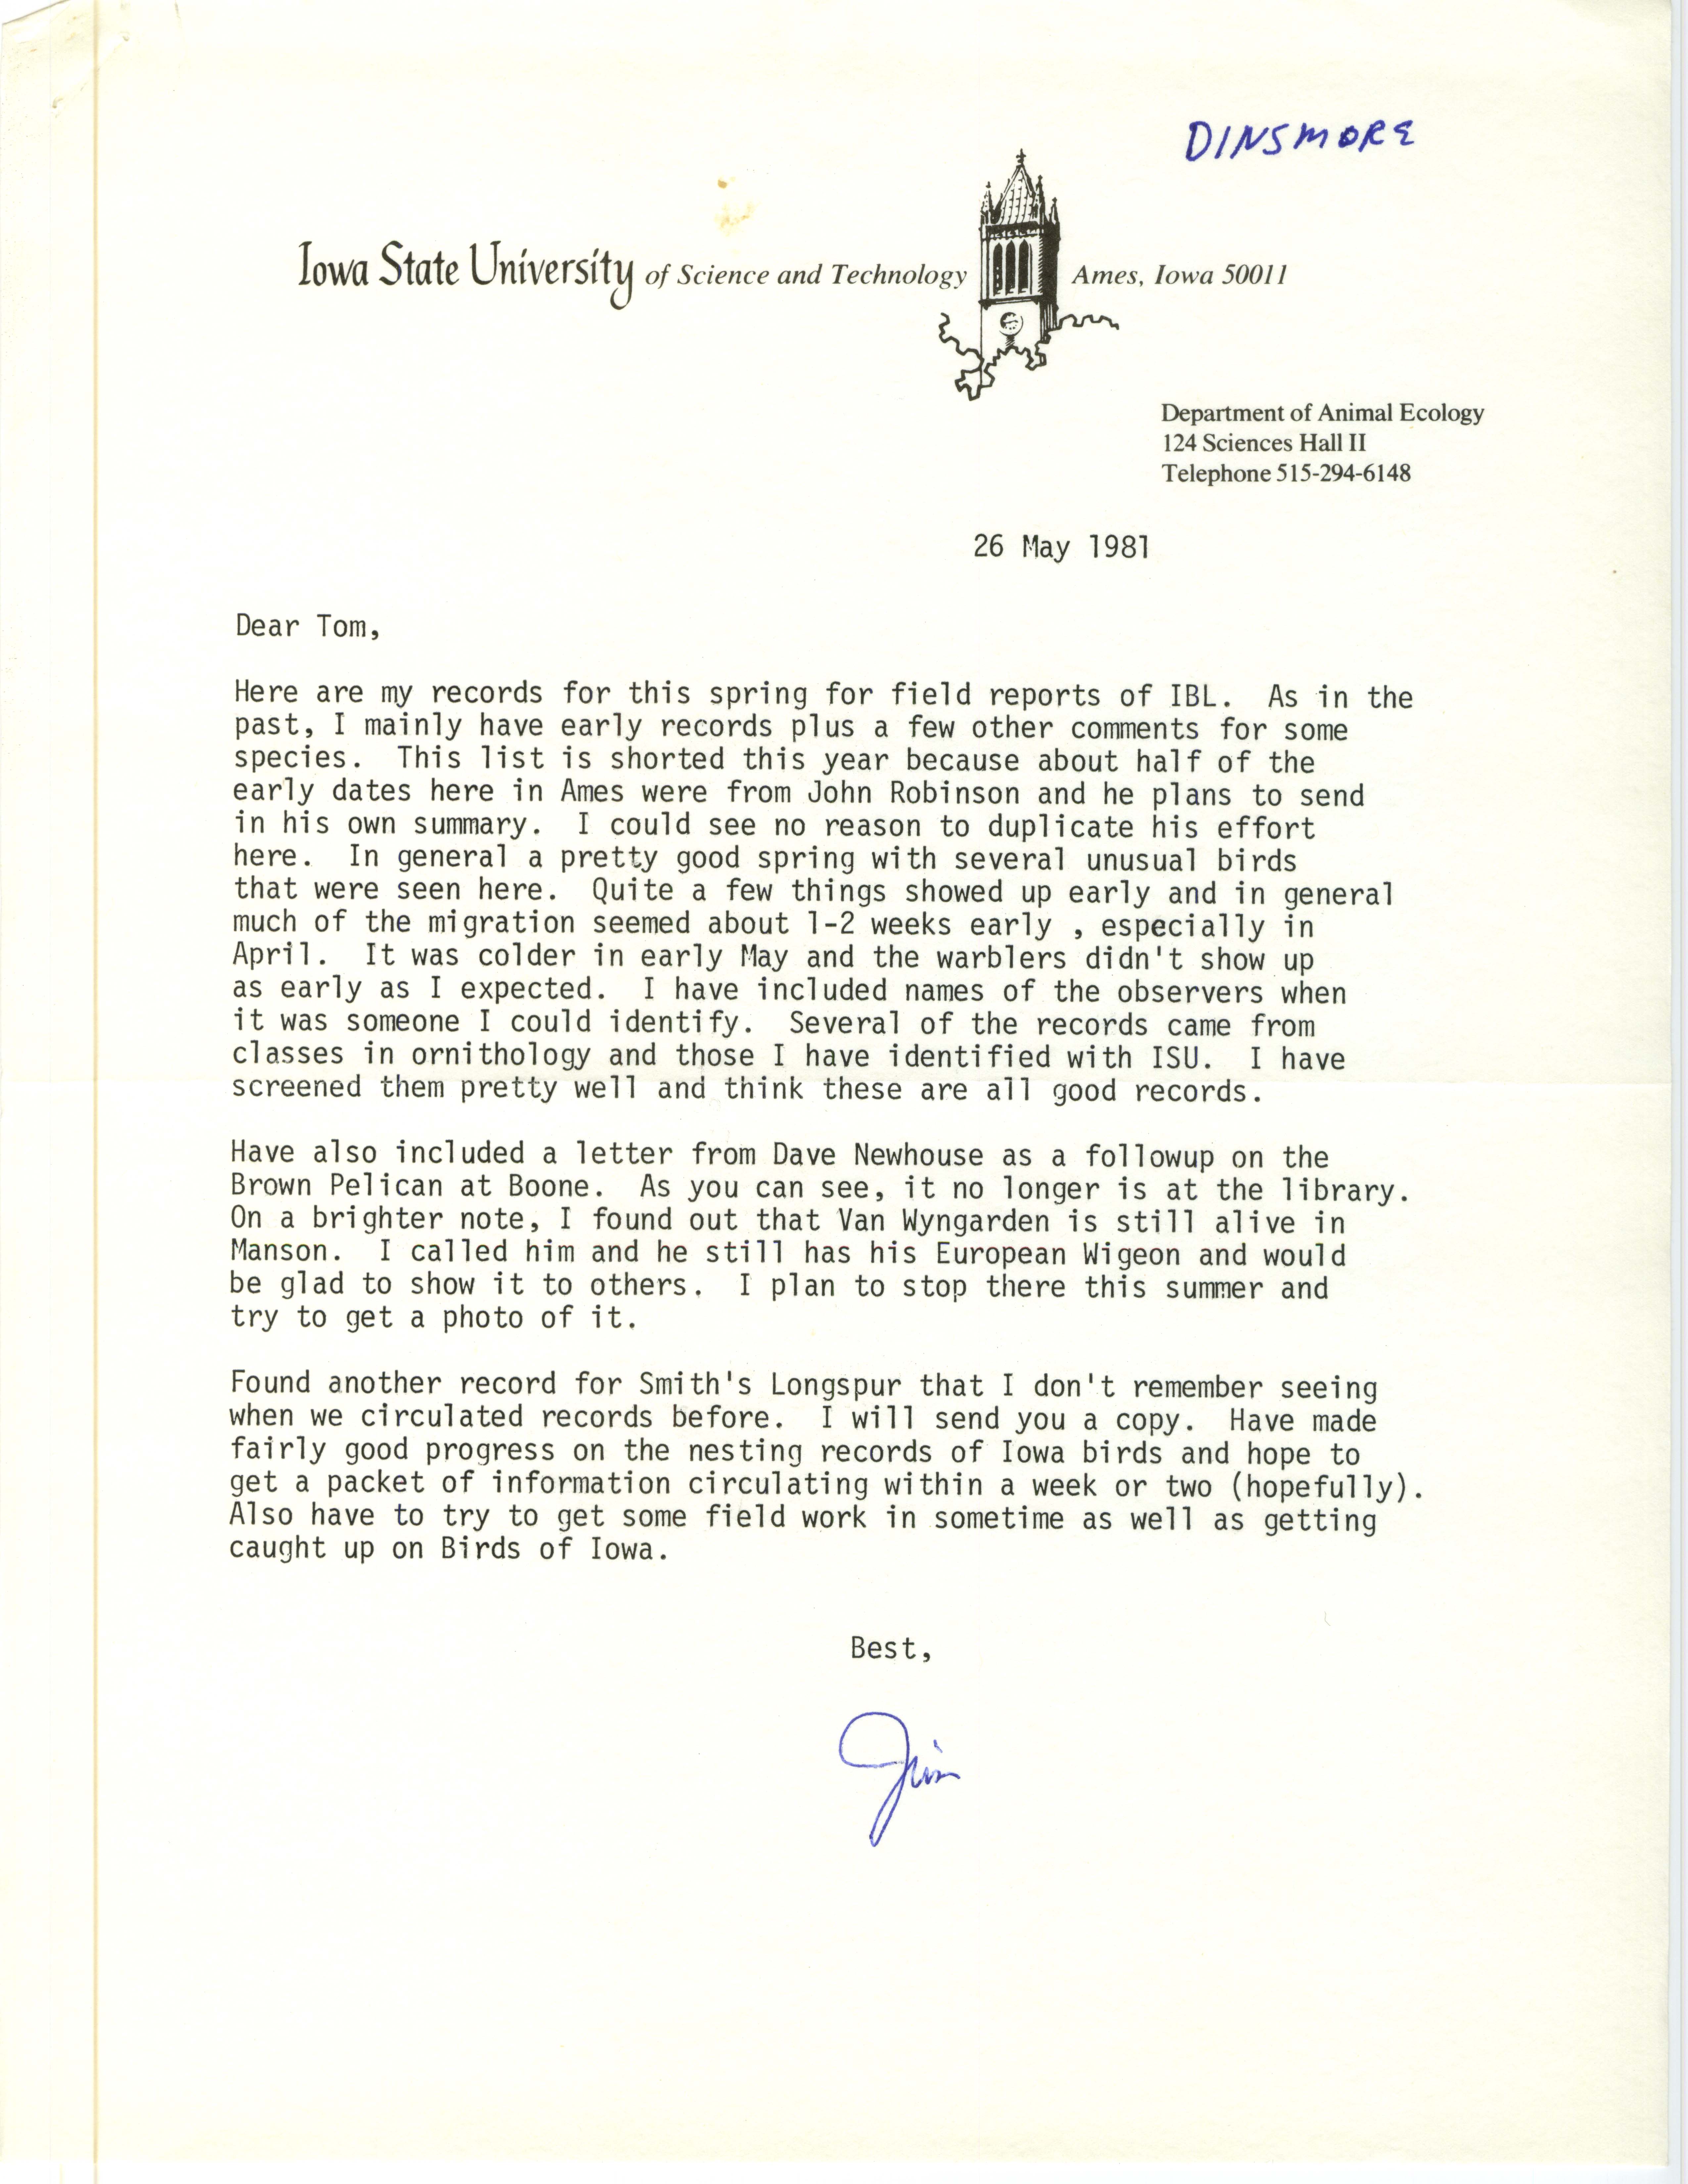 Jim Dinsmore letter to Thomas Kent regarding spring field reports, May 26, 1981